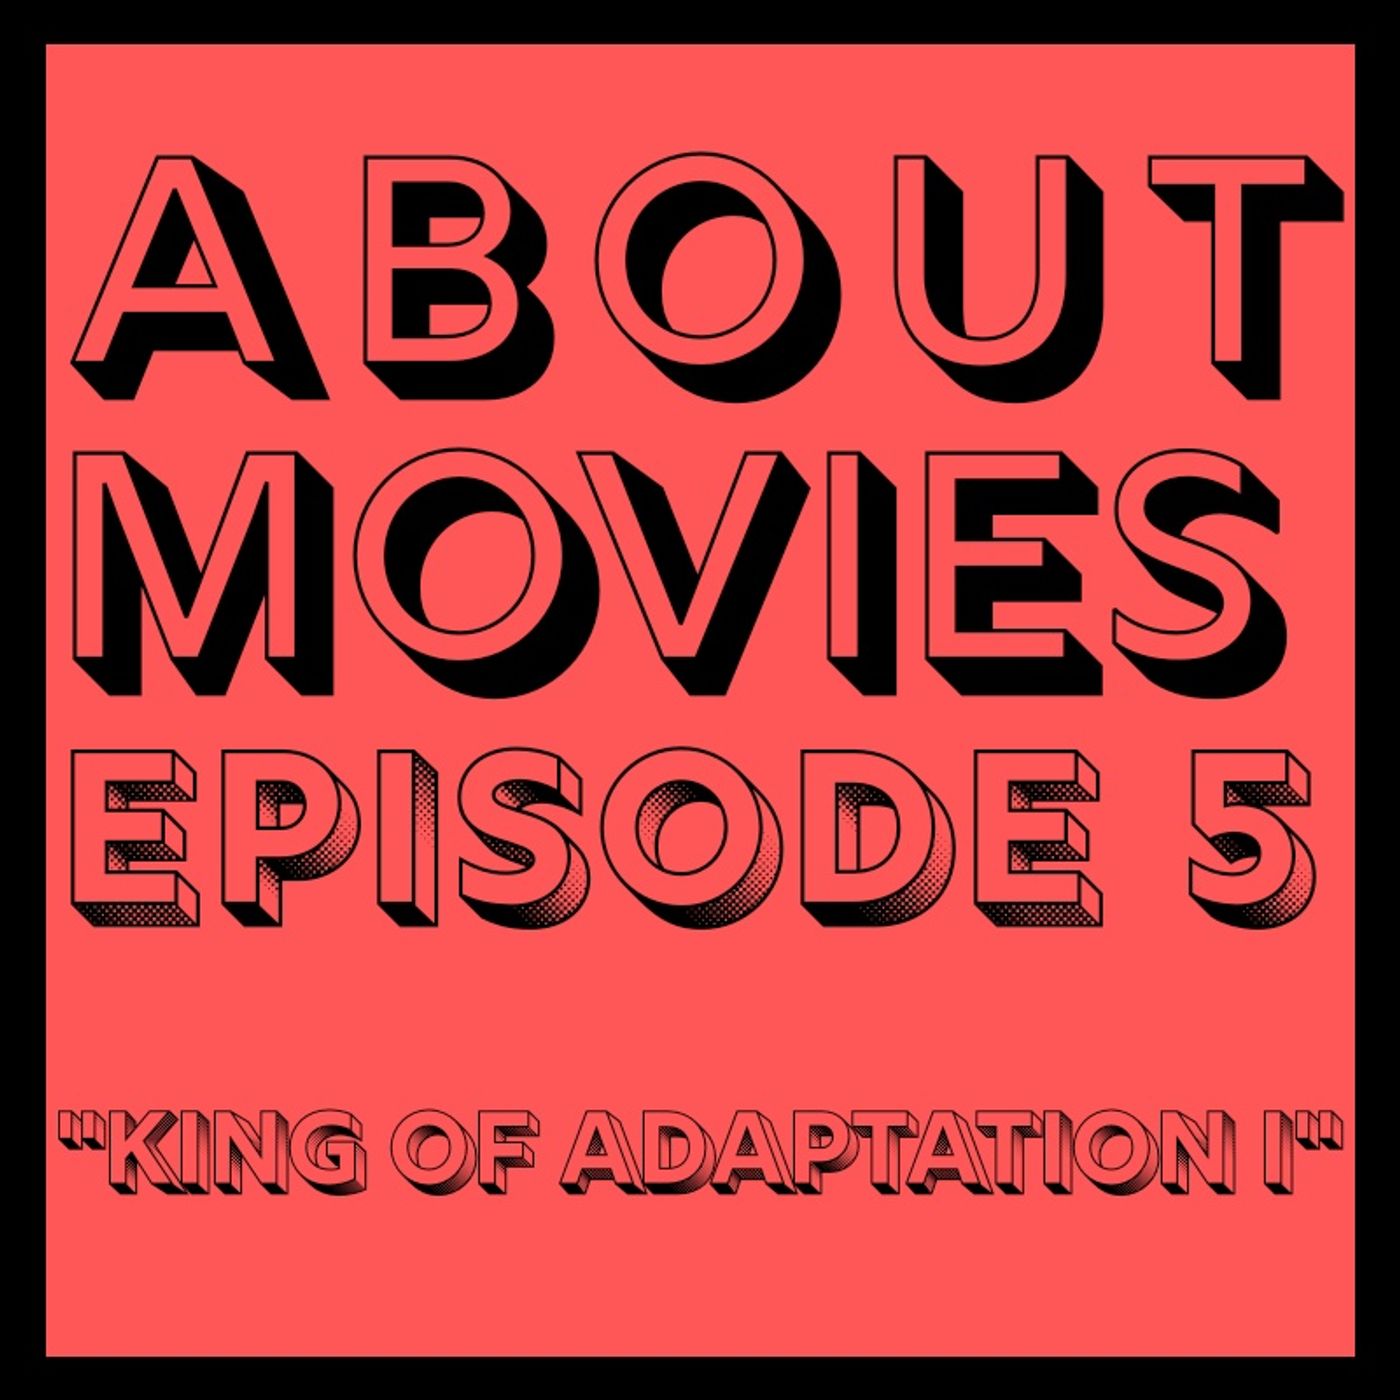 The "King" of Adaptation